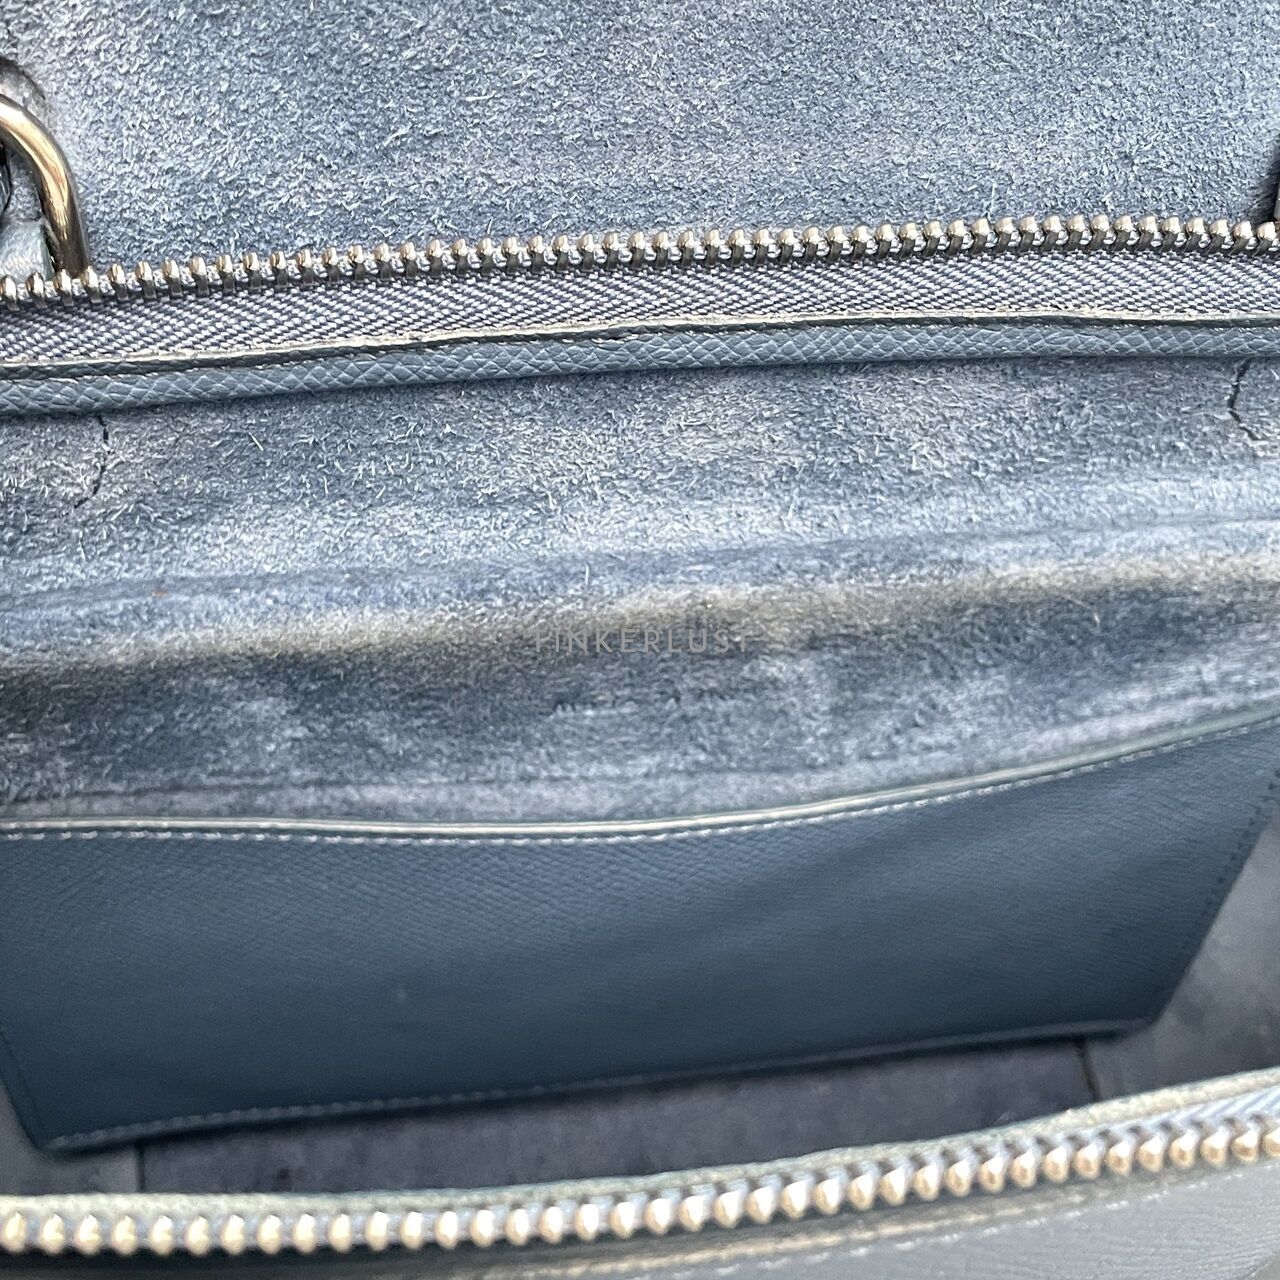 Celine Micro Belt Bag Blue Grained Calfskin SHW Handbag